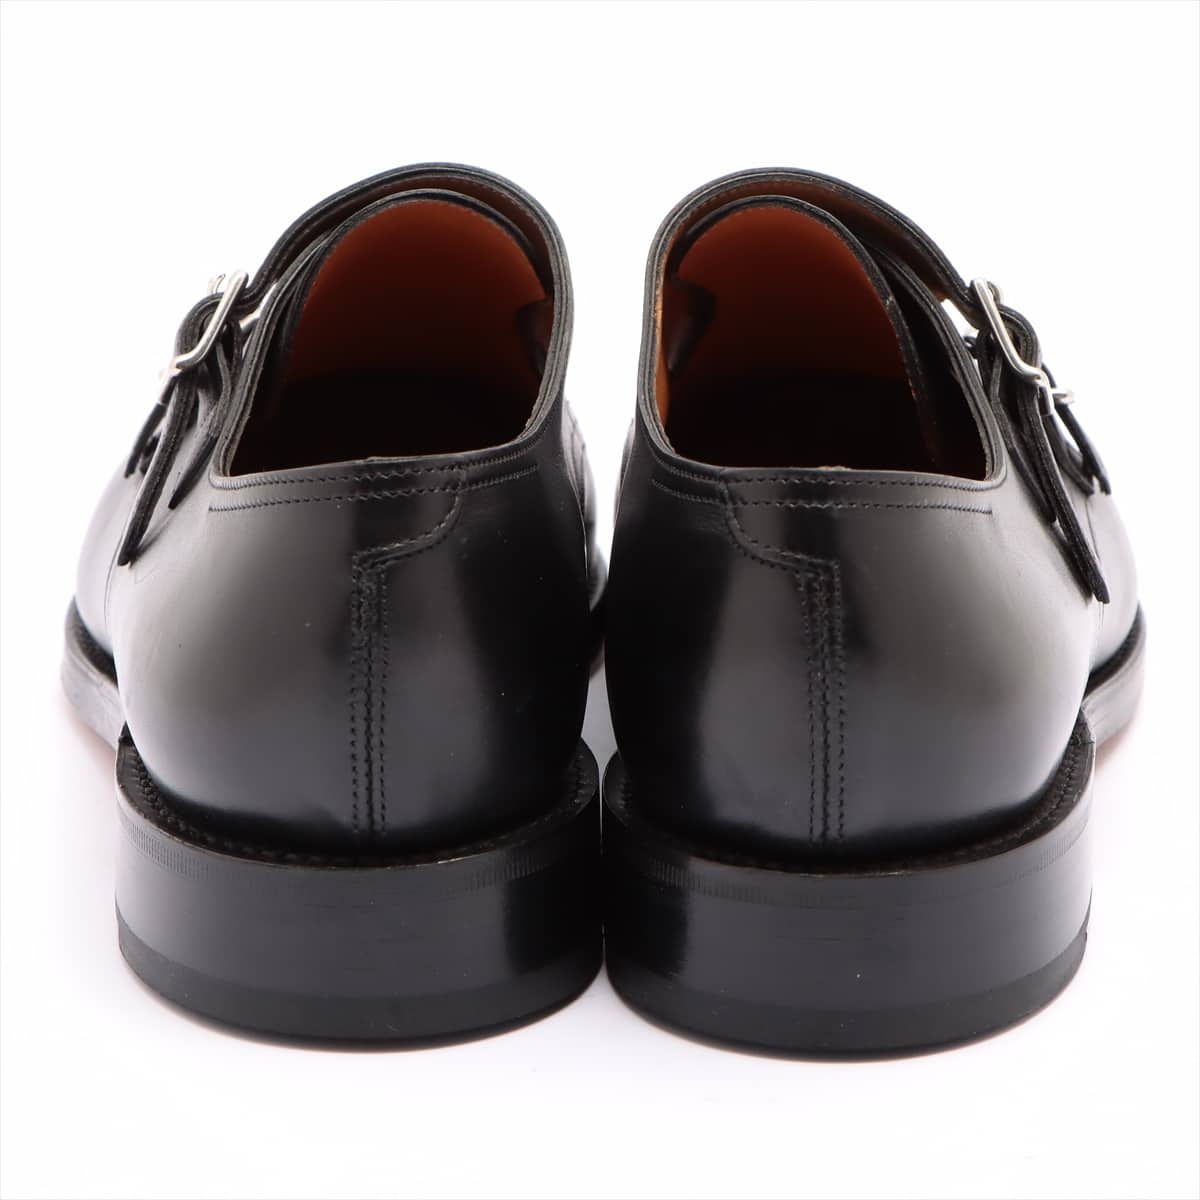 John Lobb Leather Dress shoes 8 Men's Black Double monk strap